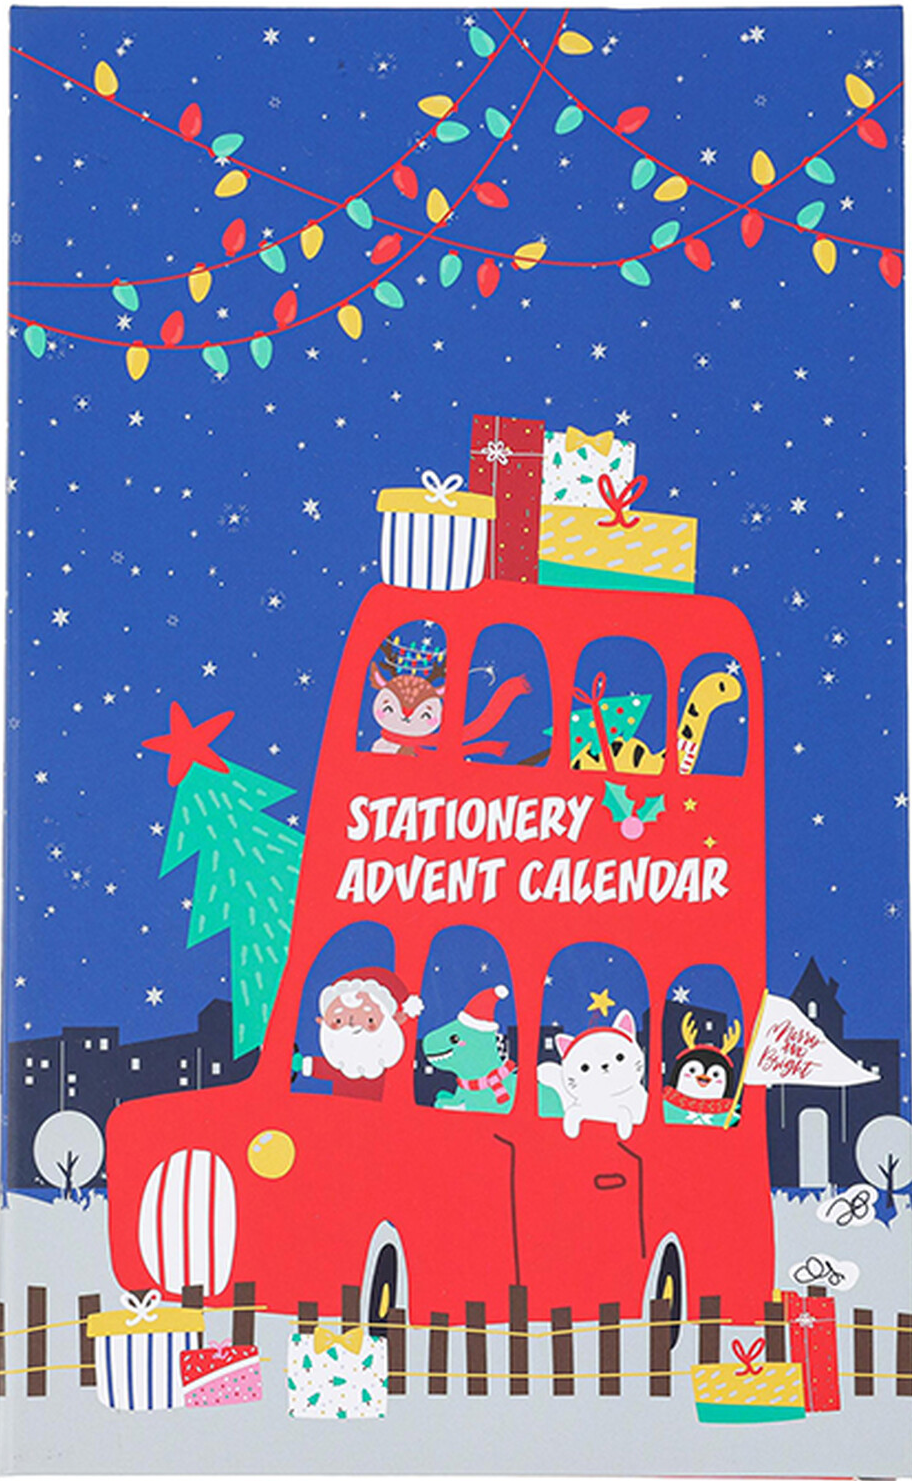 Stationery Advent Calendar Content (EN)